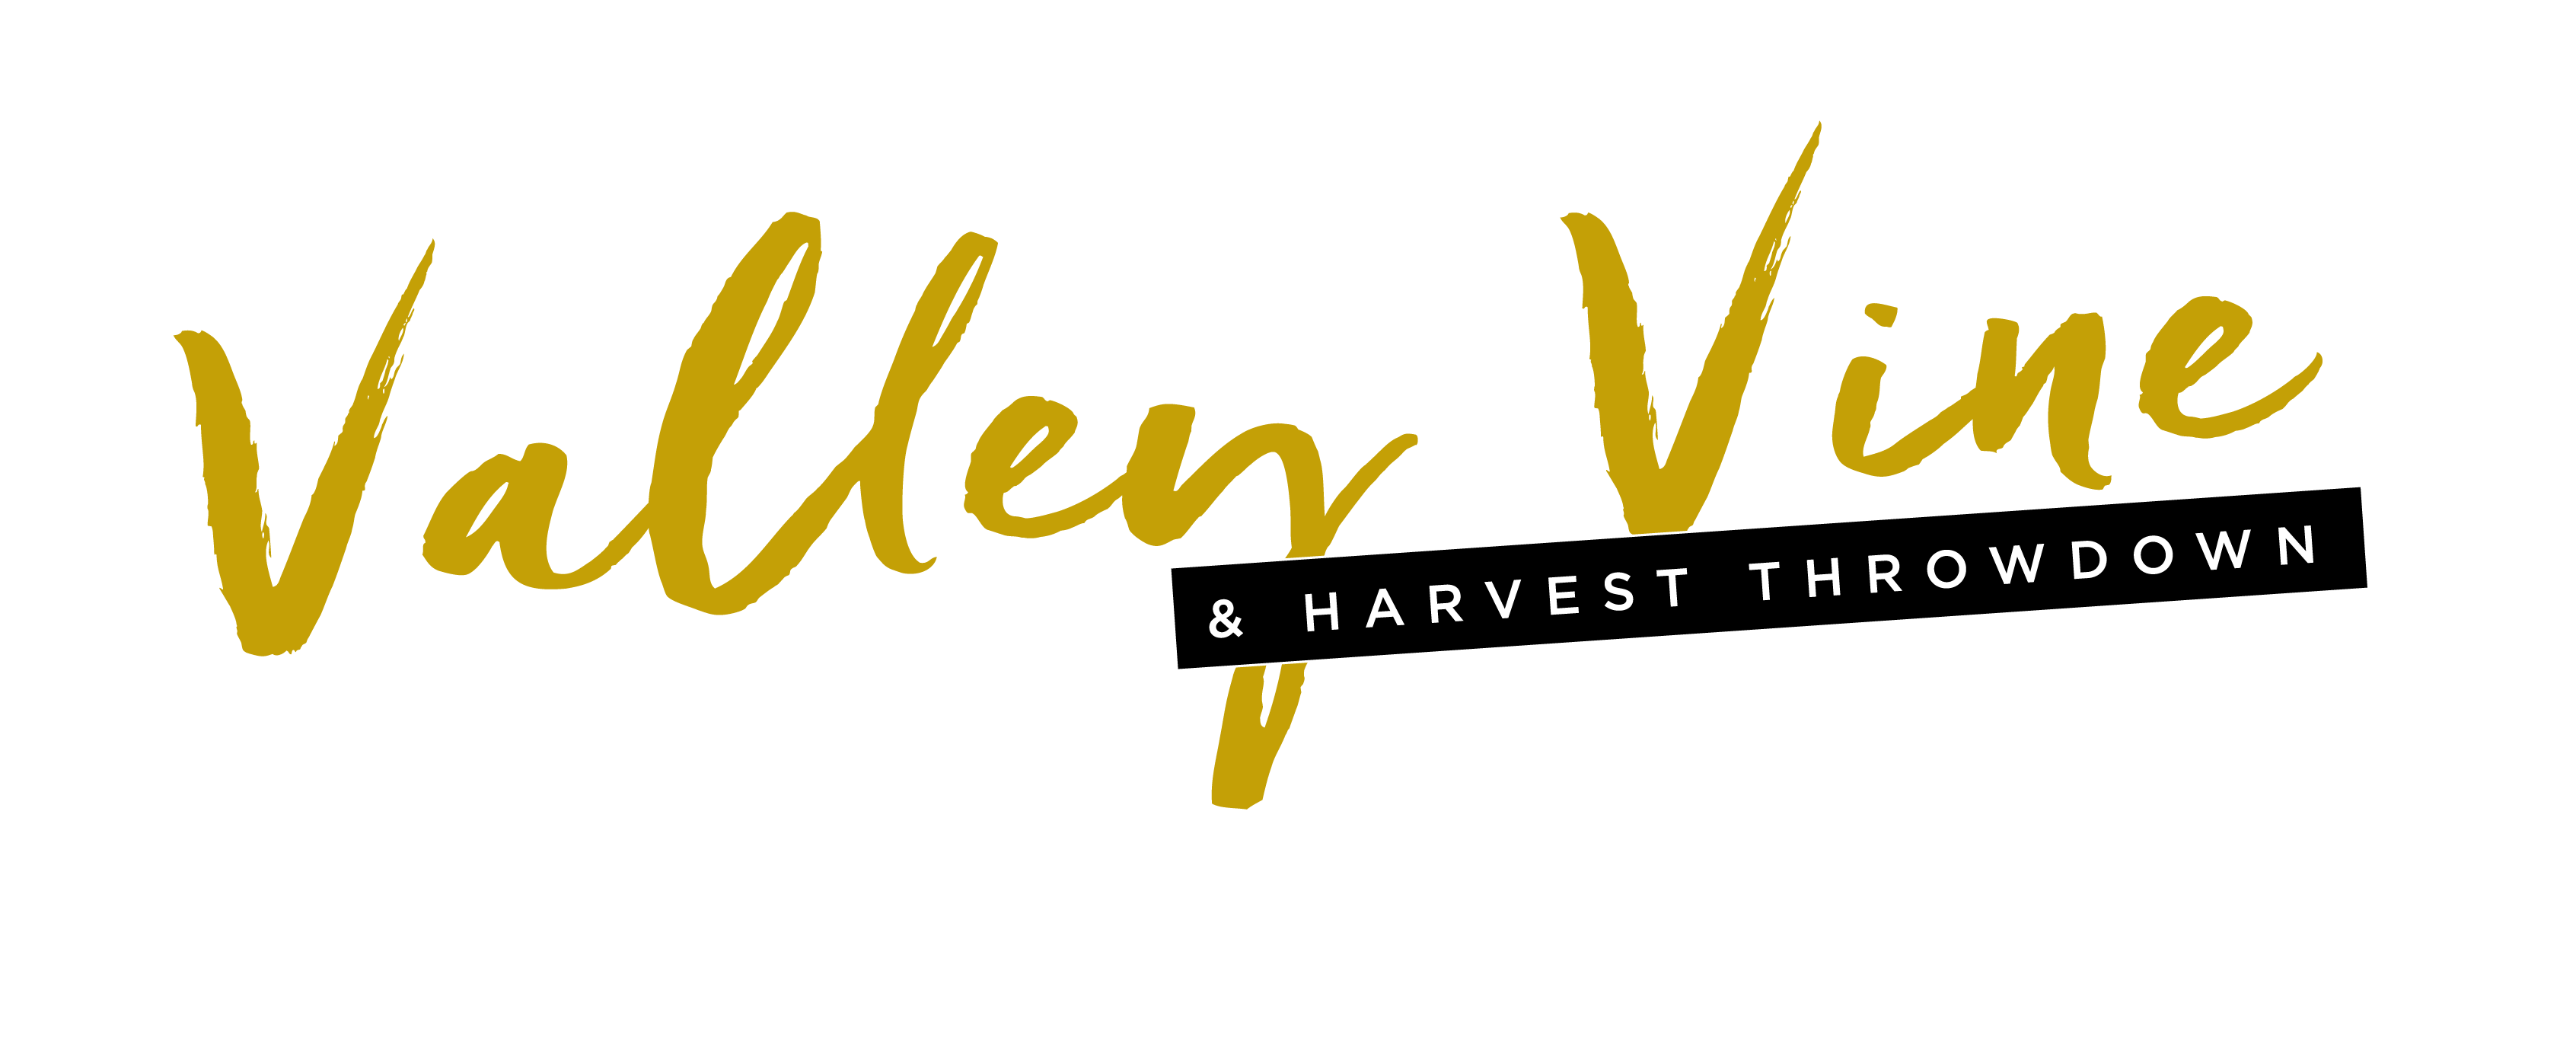 canvas health valley vine logo